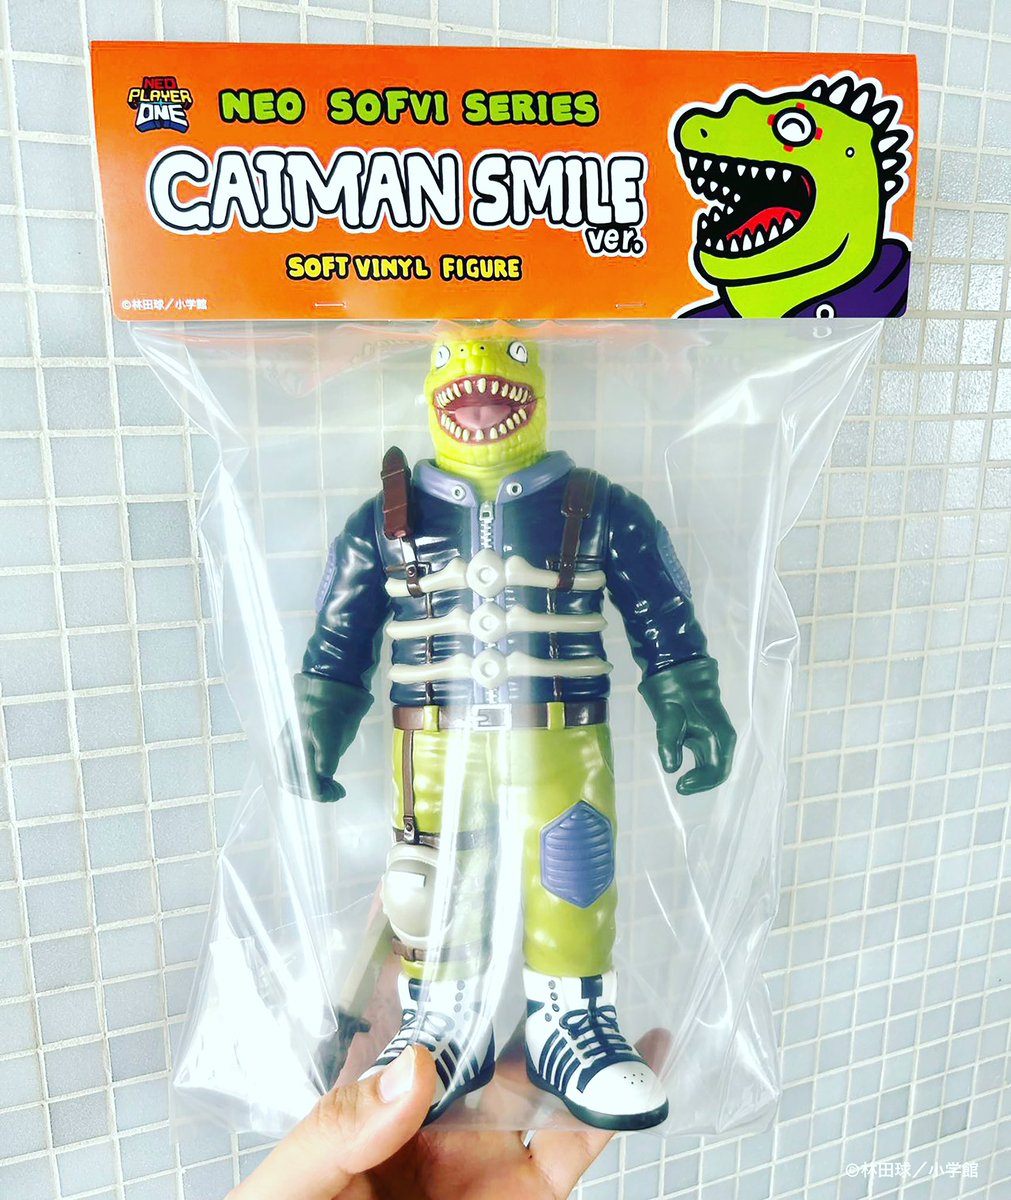 Caiman Smile ver. Coming Soon!

スマイル版カイマン、出来た！

#ドロヘドロ #dorohedoro #neoplayerone